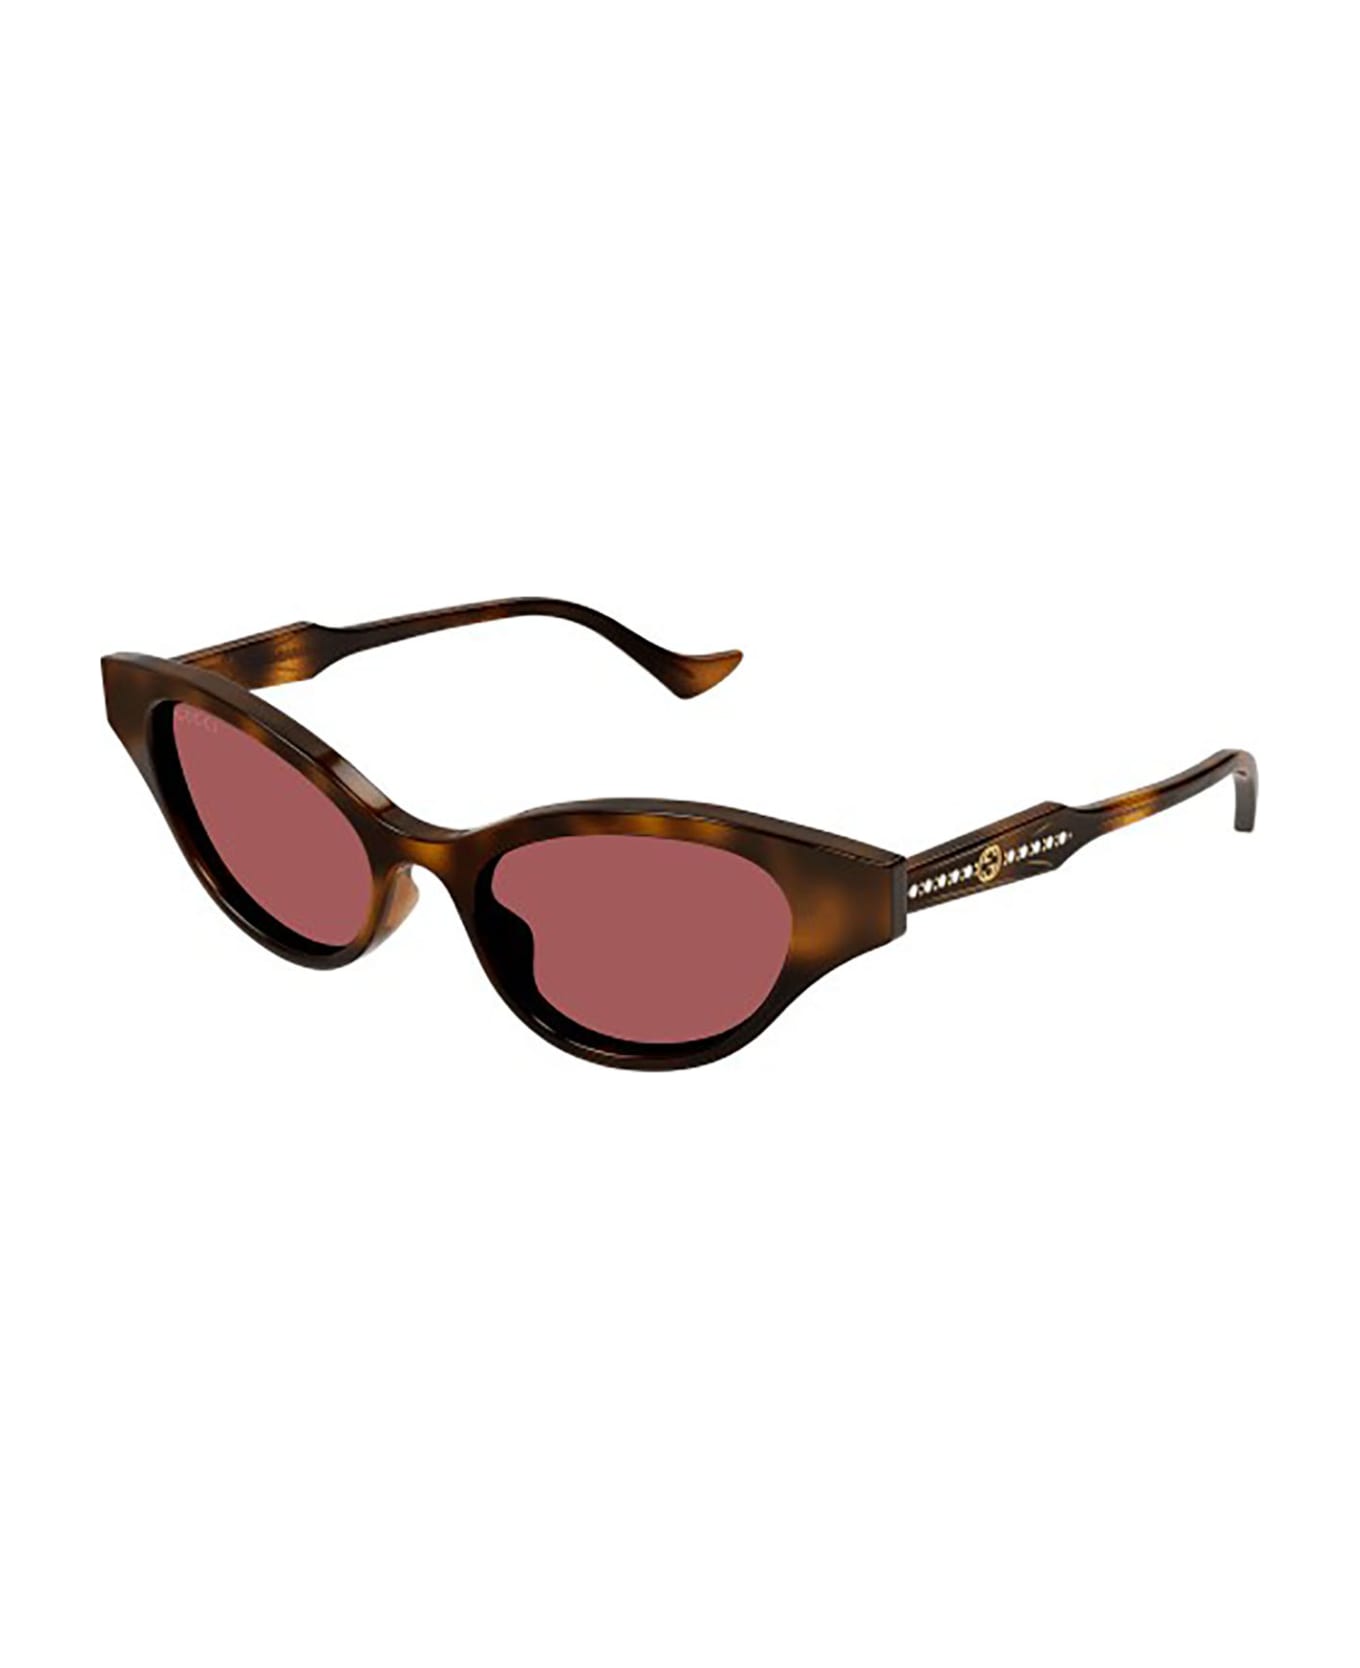 Gucci Eyewear GG1298S Sunglasses - Havana Havana Brown サングラス